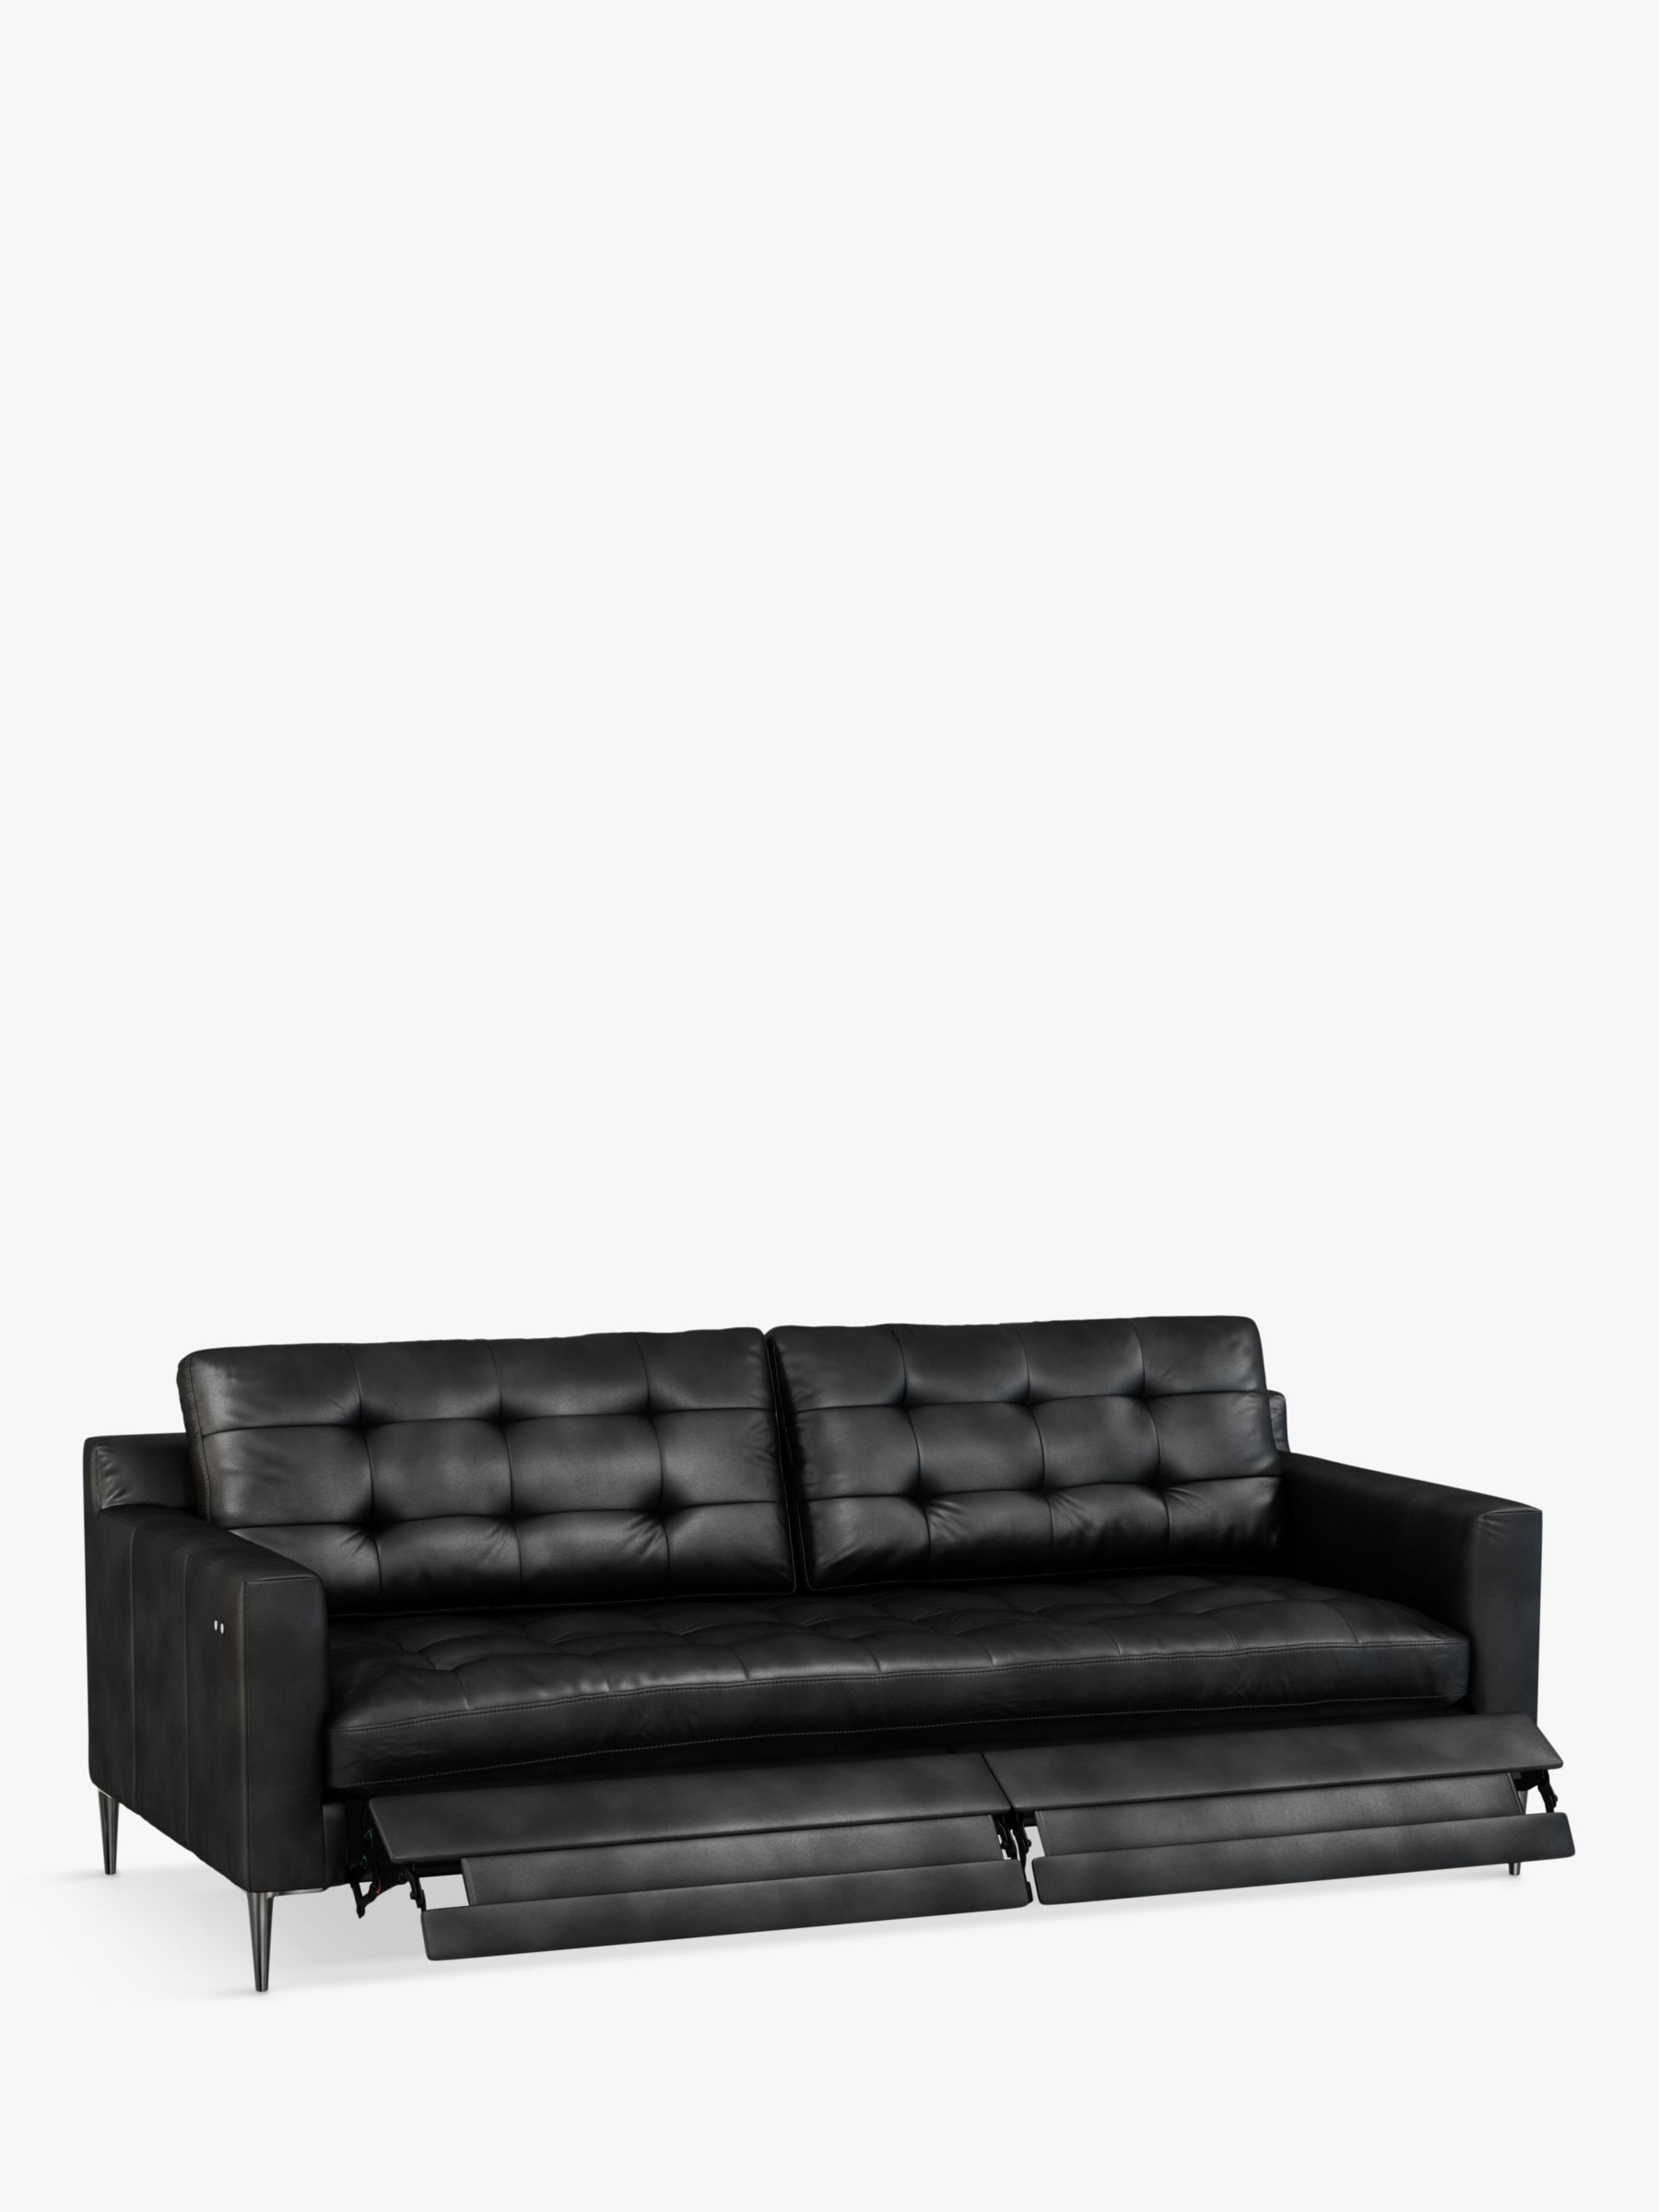 Draper Range, John Lewis Draper Motion Large 3 Seater Leather Sofa with Footrest Mechanism, Metal Leg, Contempo Black